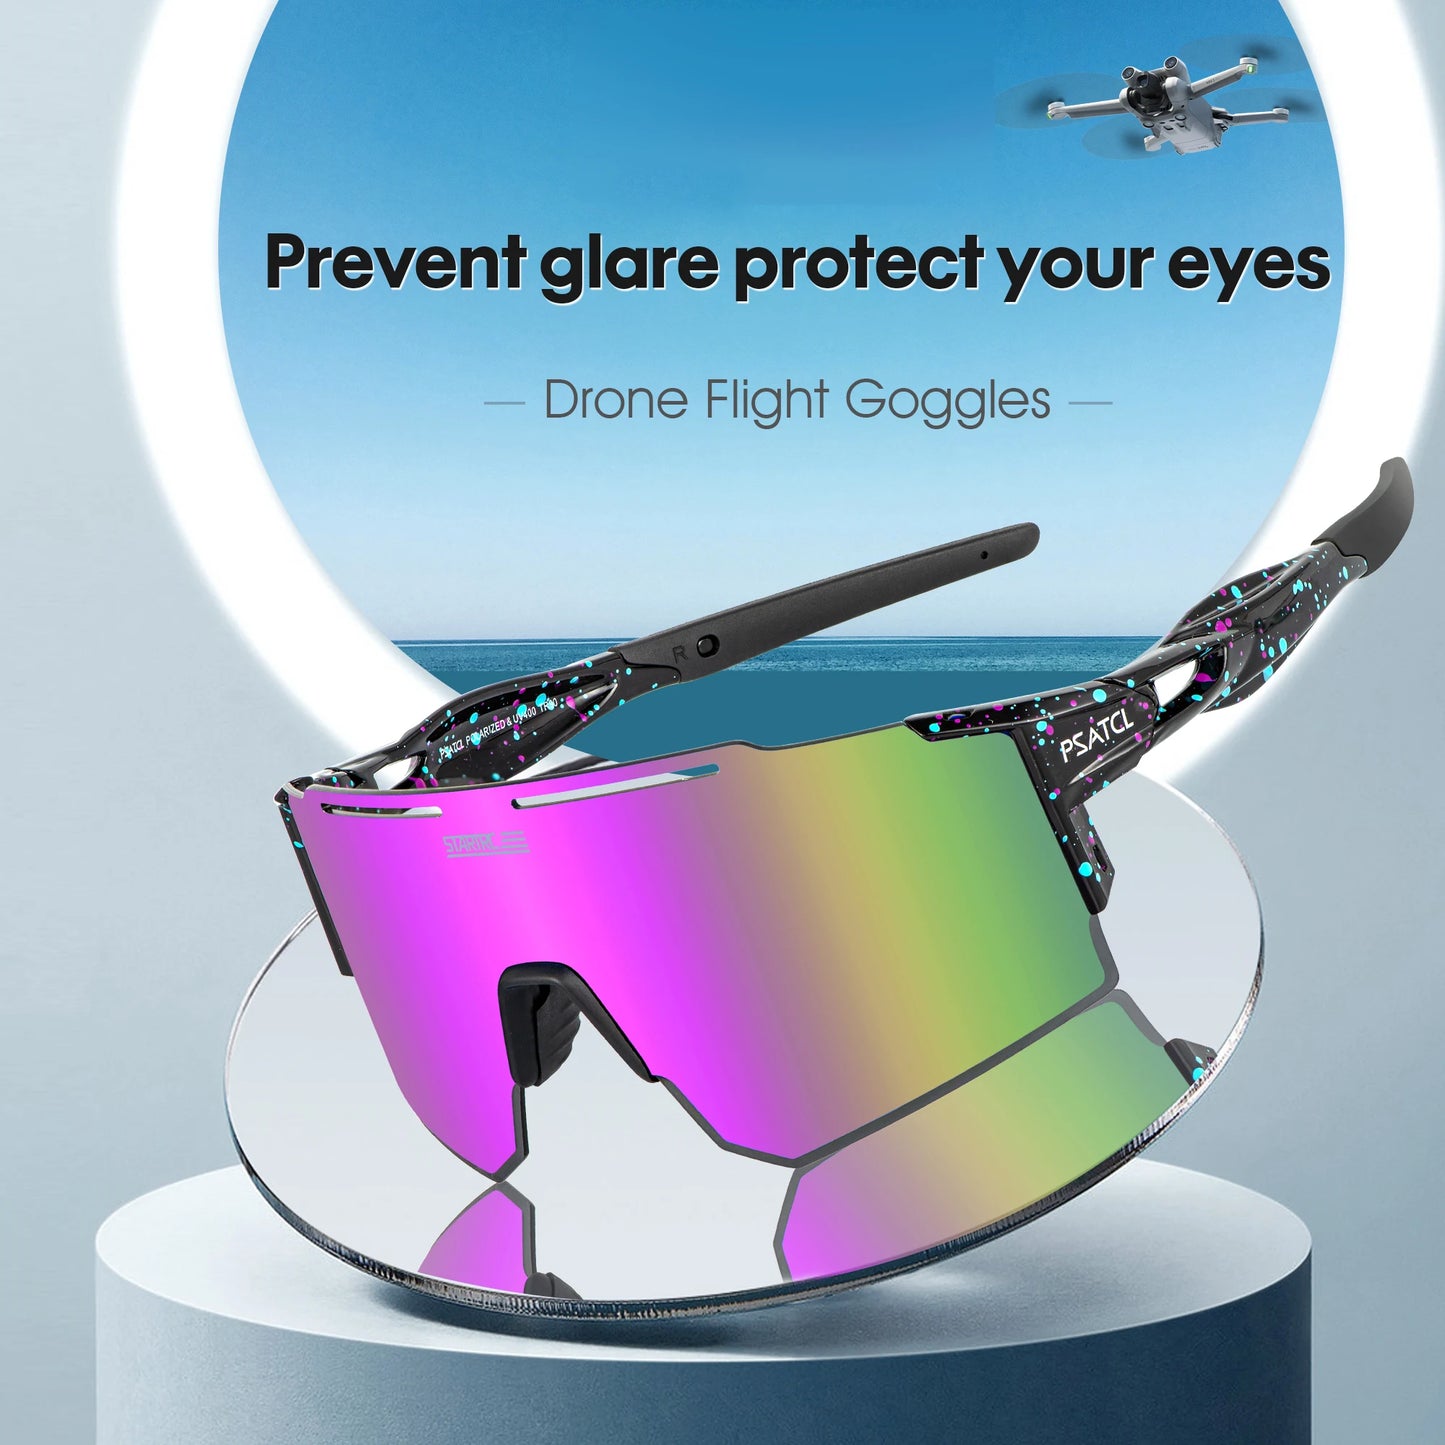 Drone Flight Goggles Anti-glare Prevent Glare Protect Eyes for DJI, RiotNook, Other, drone-flight-goggles-anti-glare-prevent-glare-protect-eyes-for-dji-261876419, Drones & Accessories, RiotNook